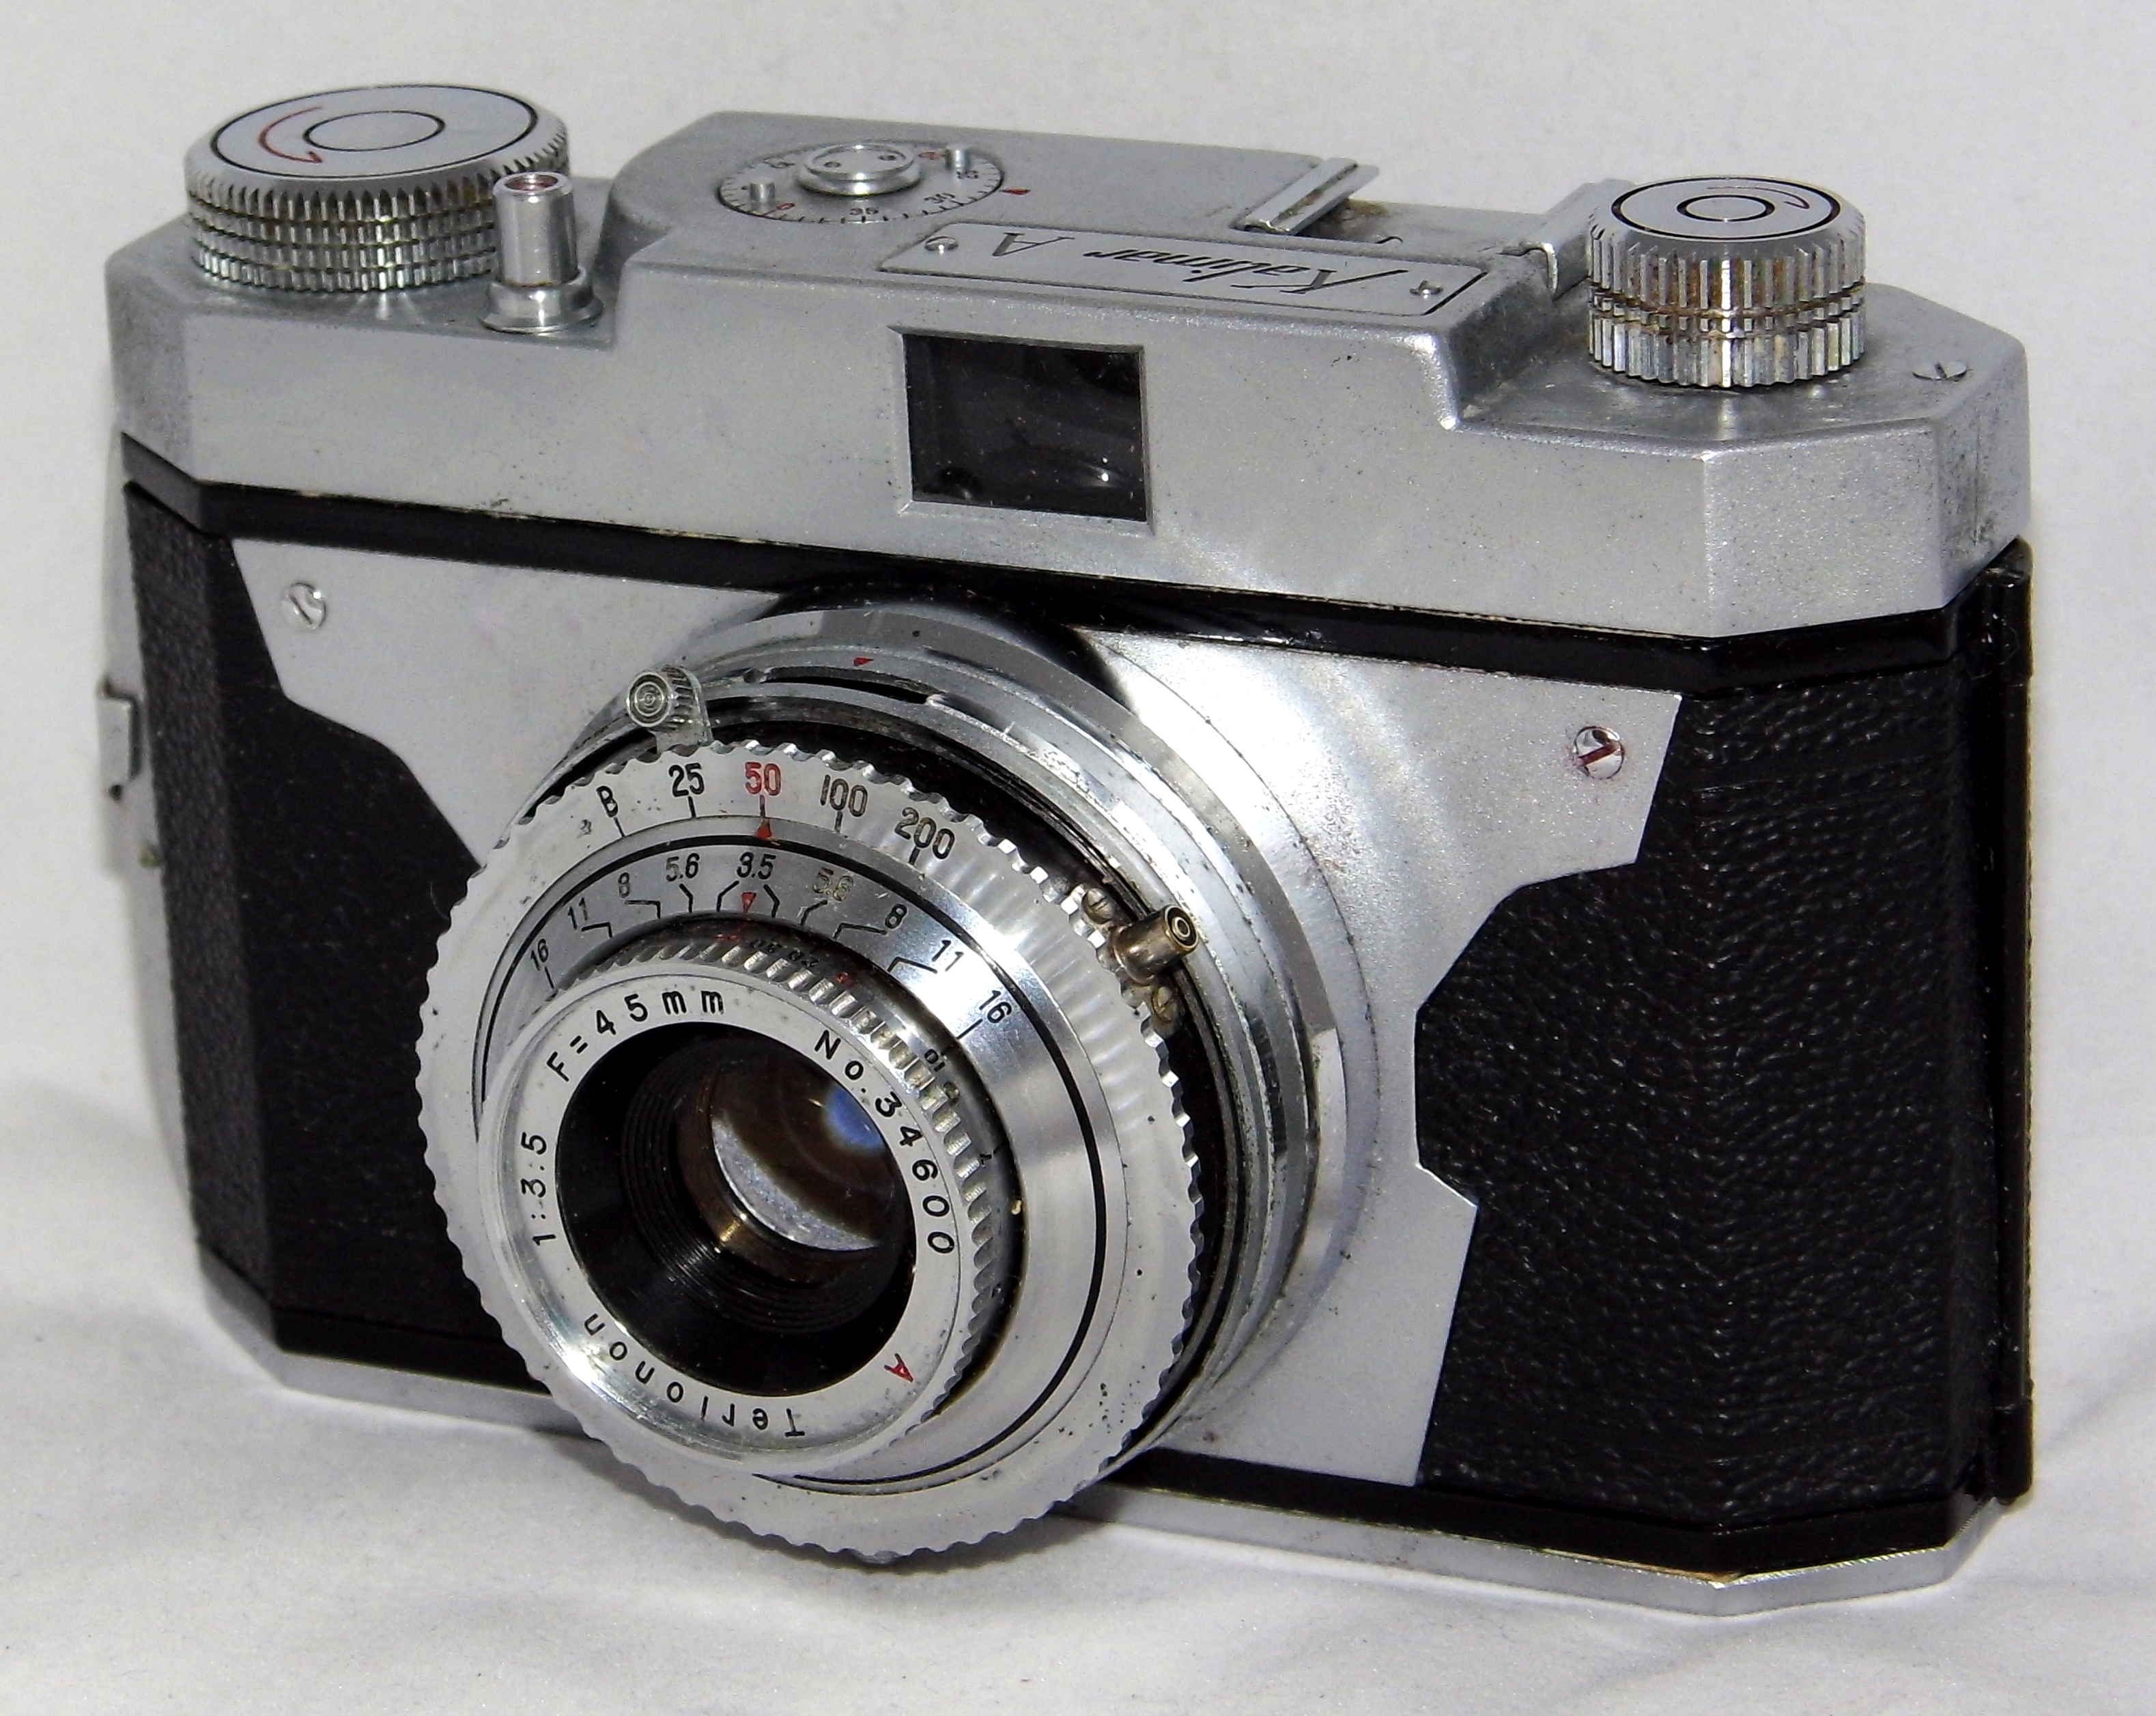 Vintage Kalimar A 35mm Film Camera, Made In Japan By Taisei Koki (T.K.C.), Circa 1950s (20654756773)